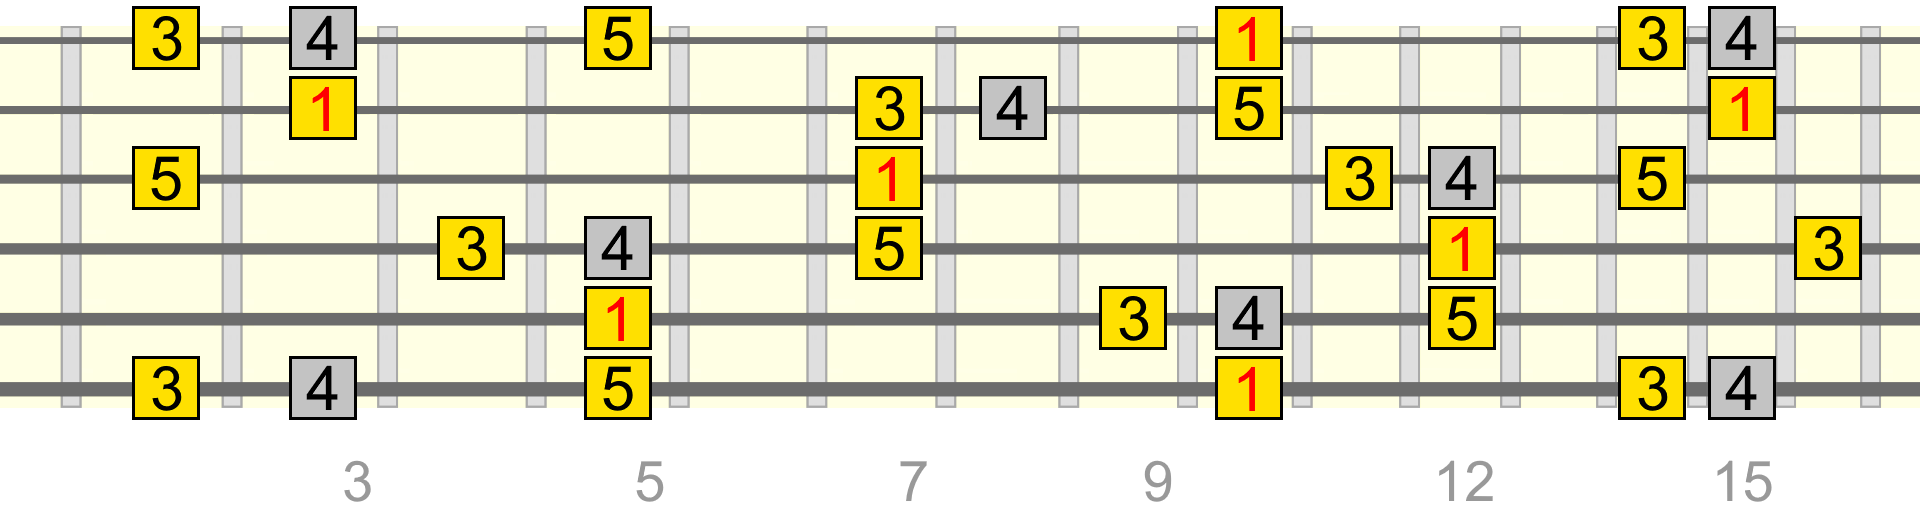 d-add-4-full-pattern